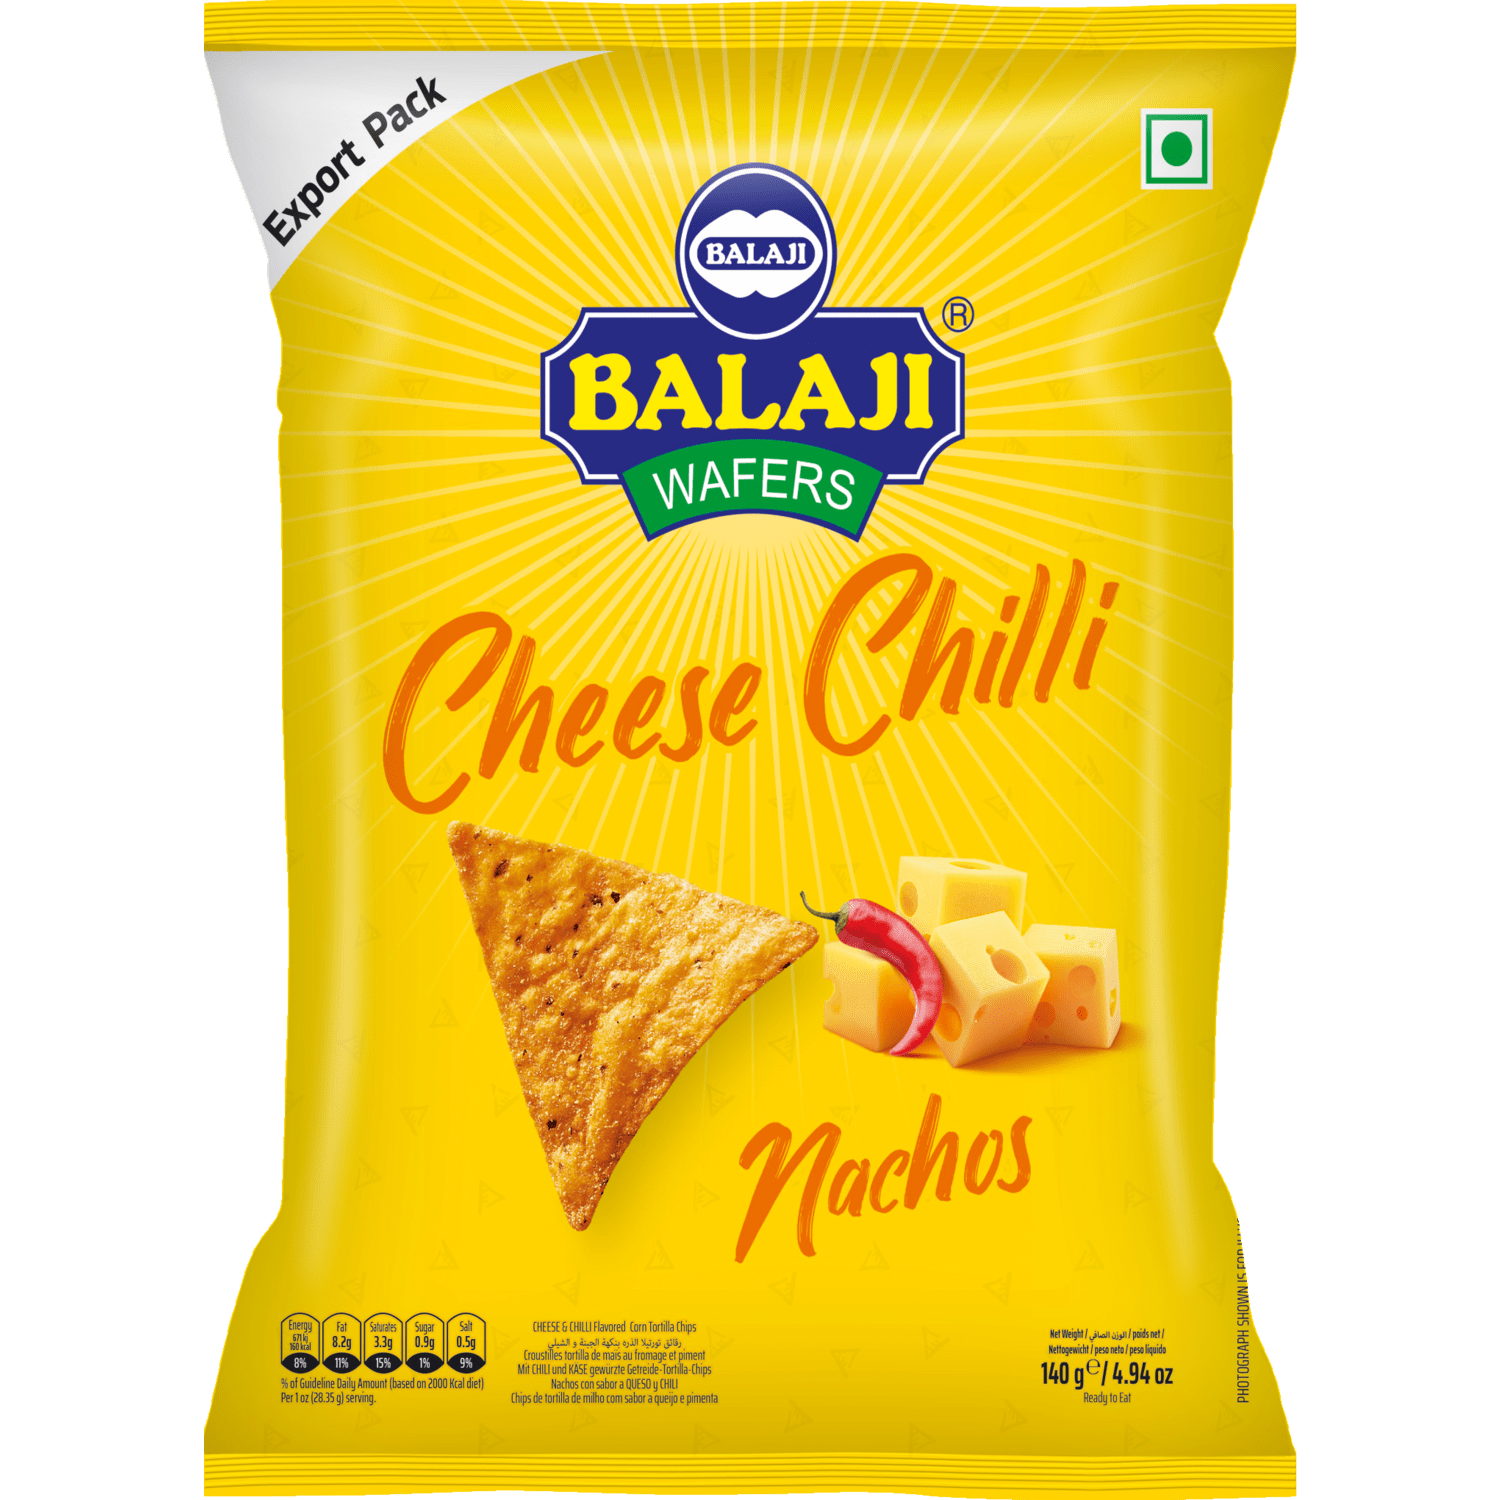 Balaji Cheese Chilli Nachos (4.94 oz pack)